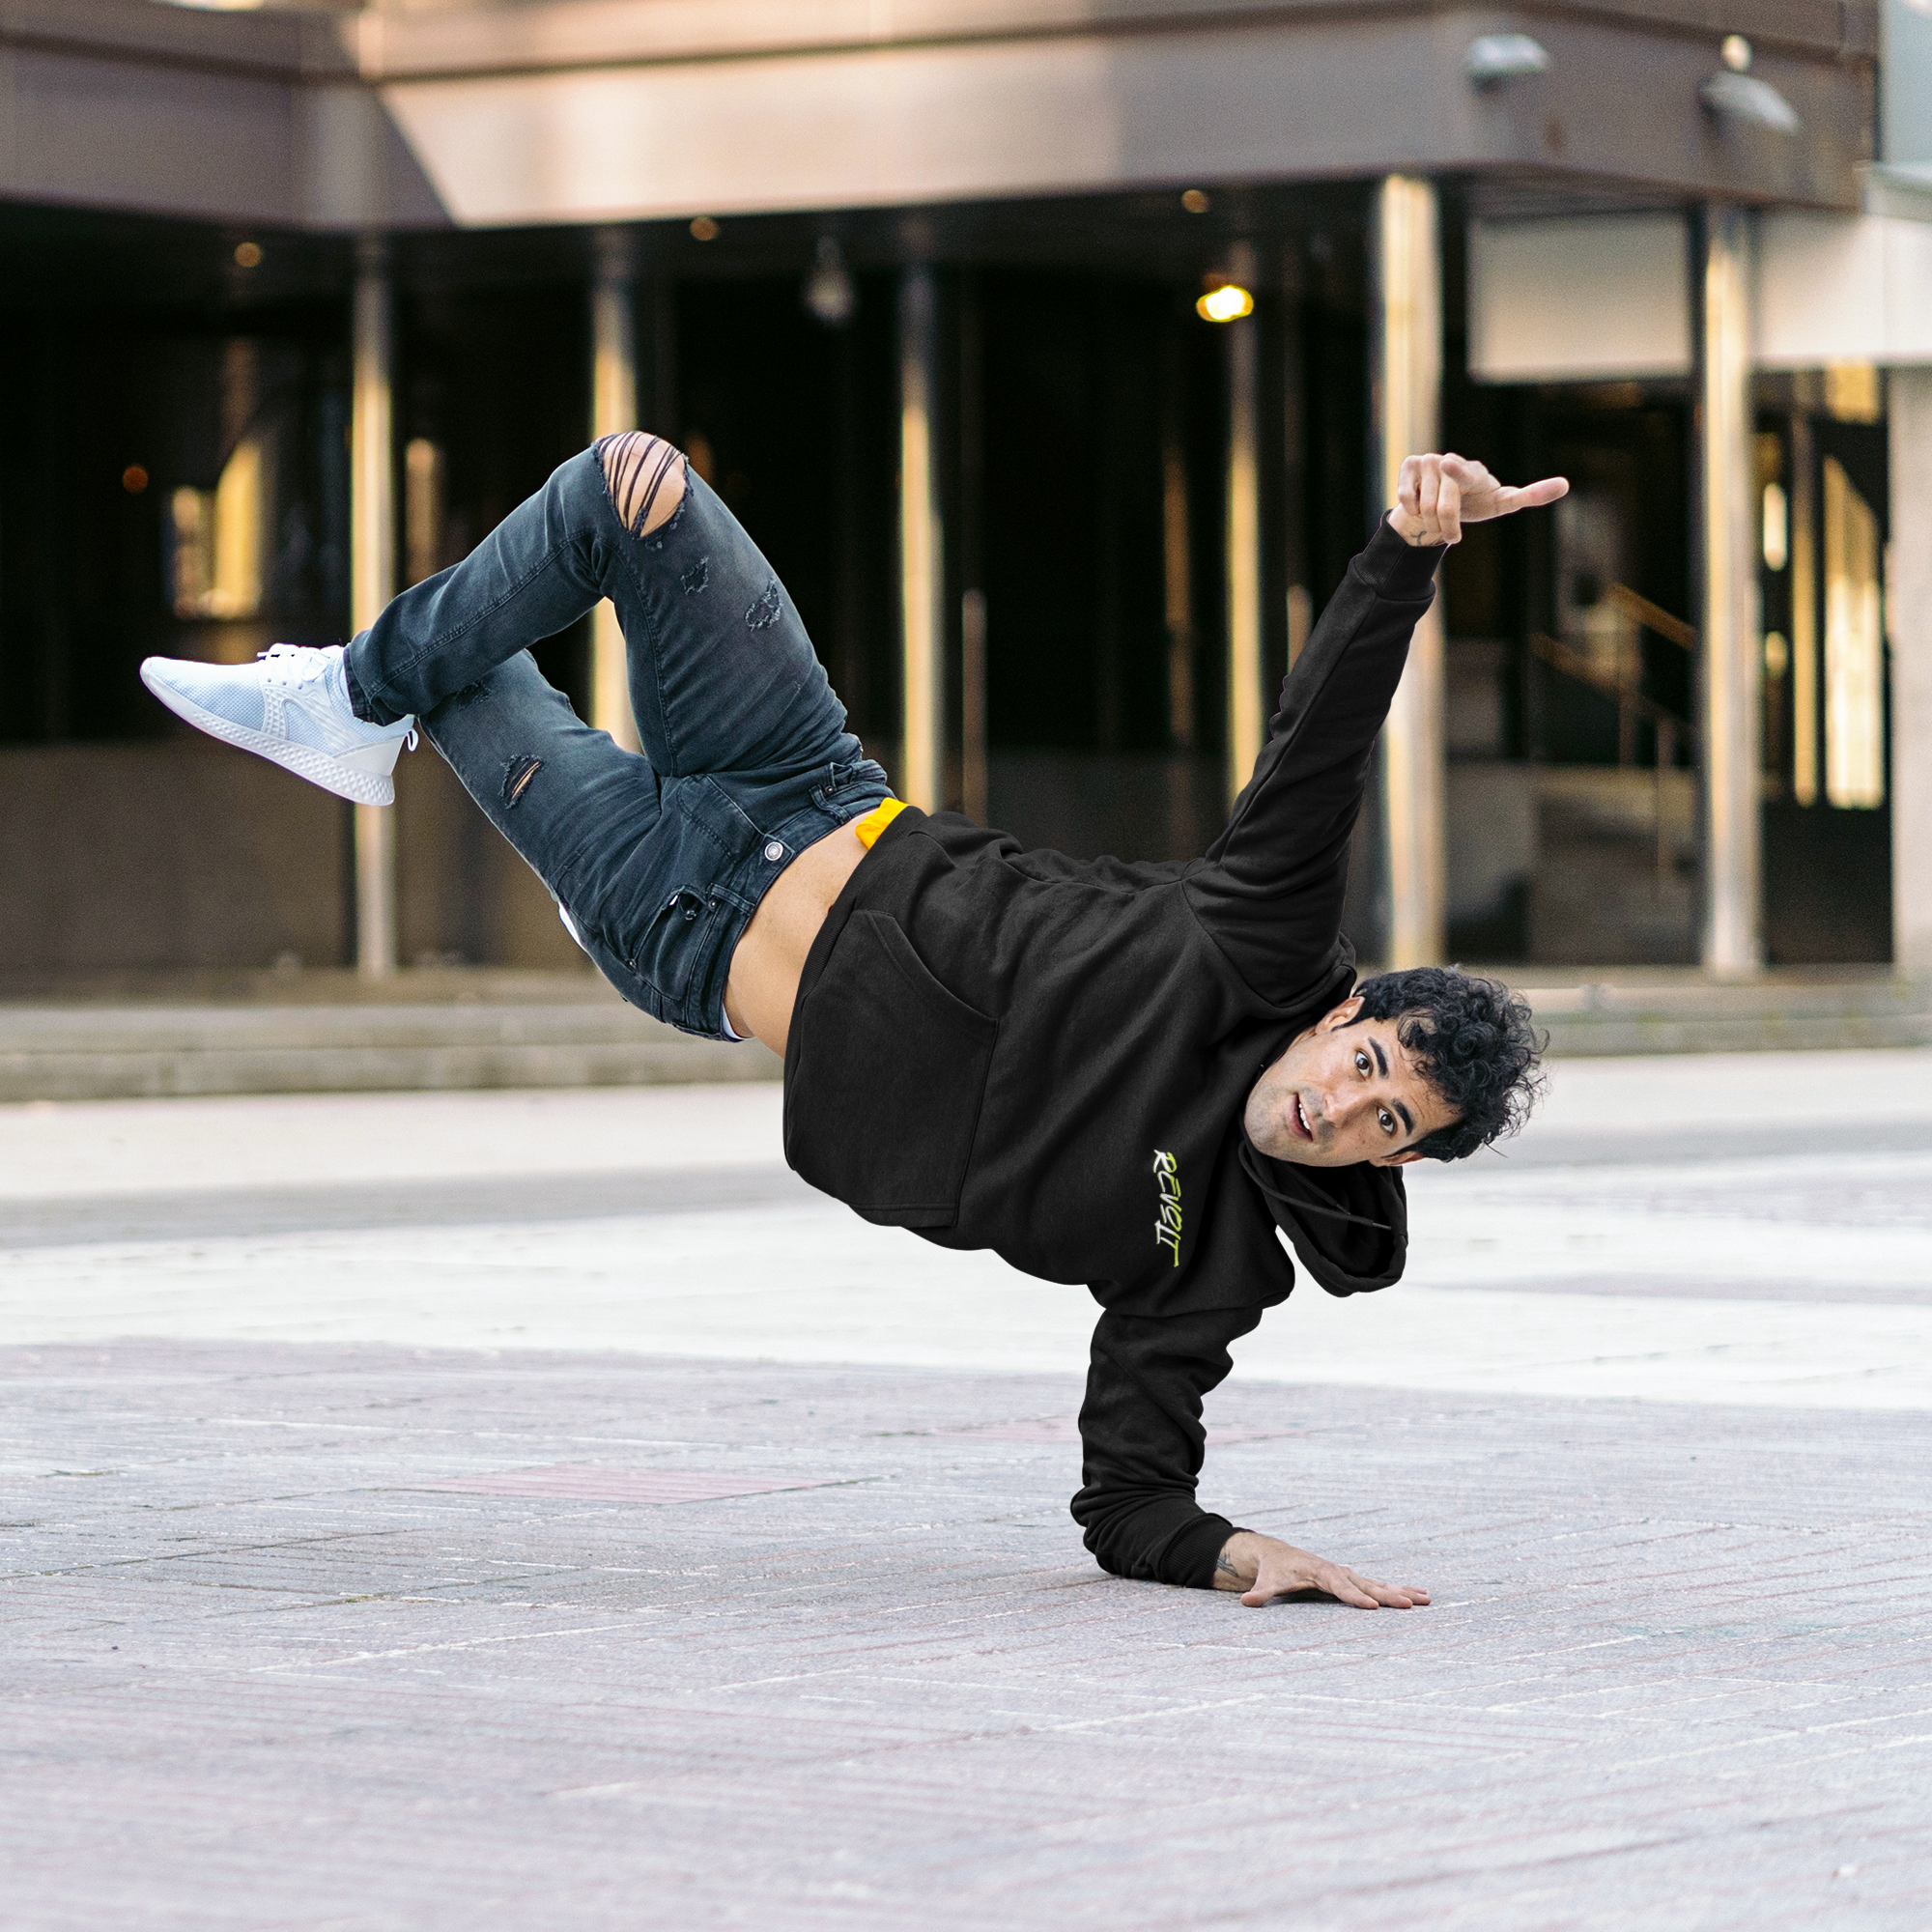 Man breakdancing in street with gym hoodie on